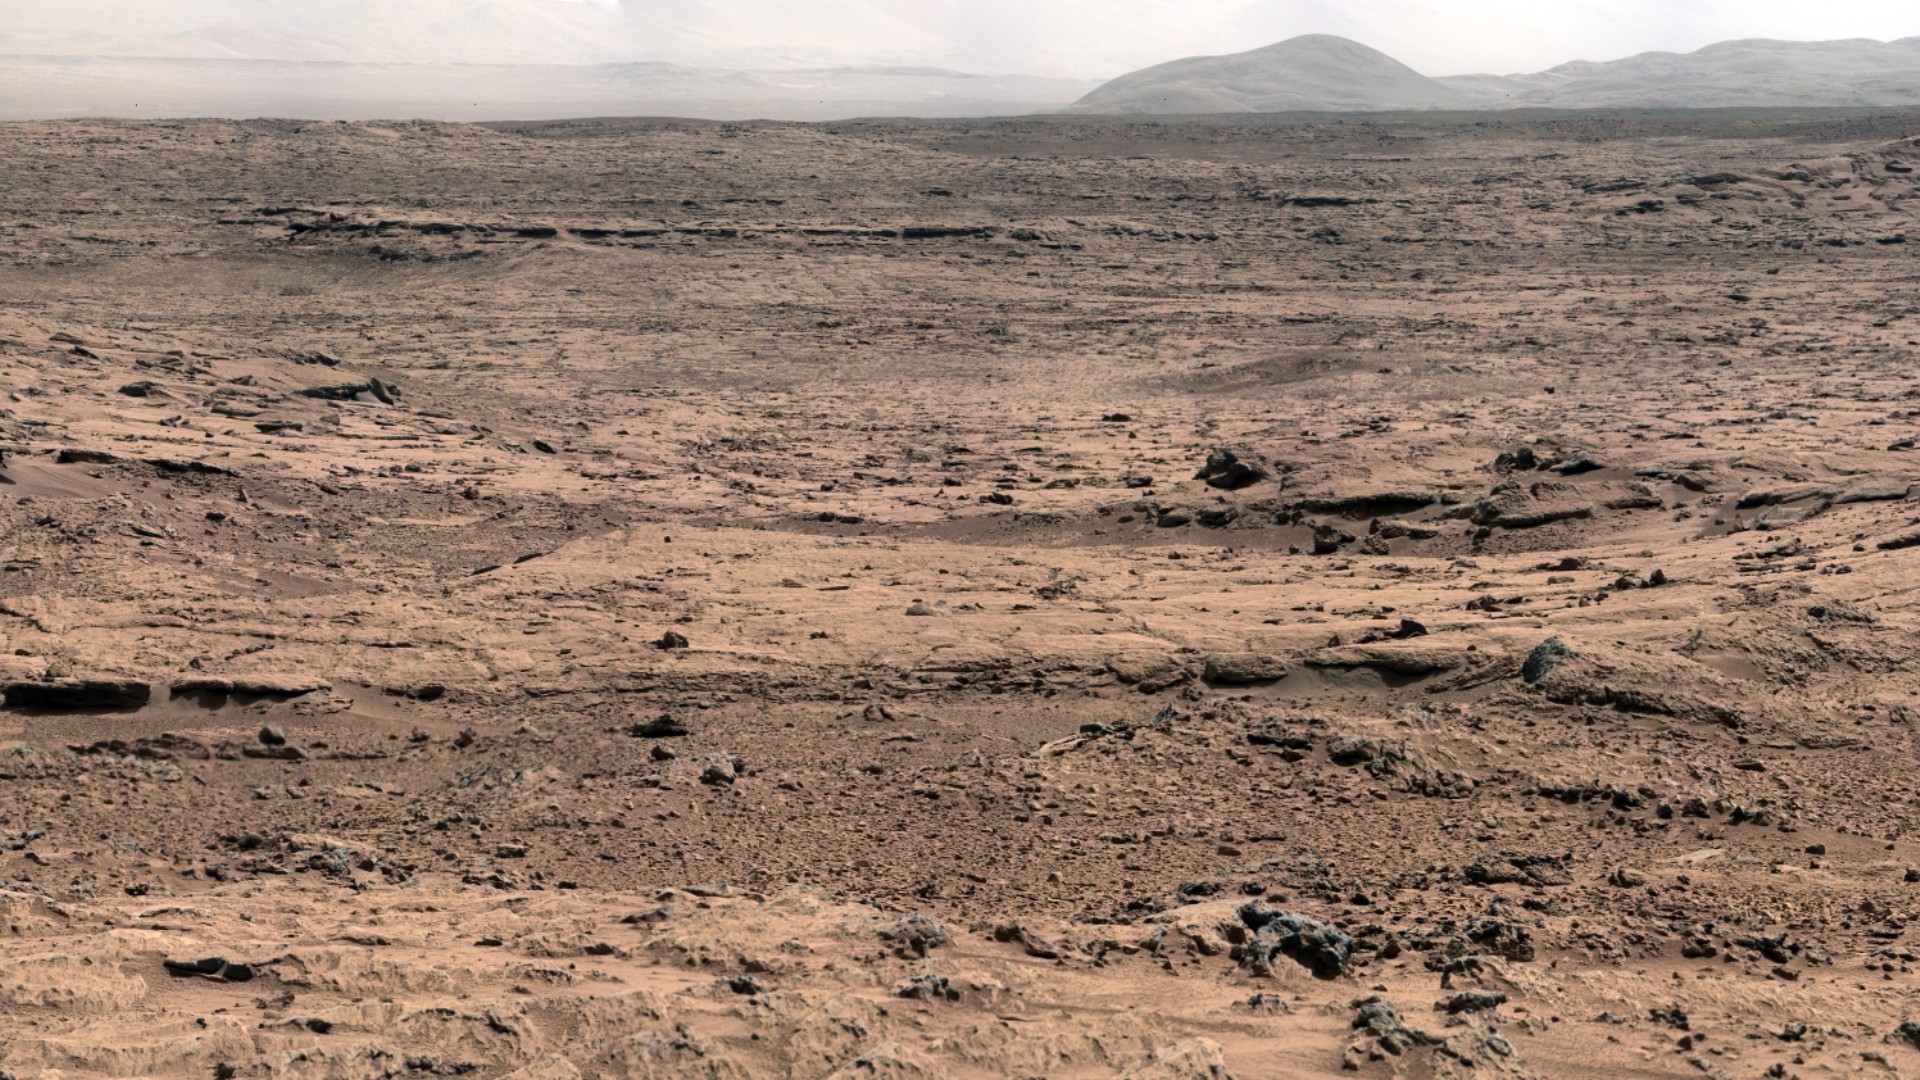 mars curiosity photos from nasa